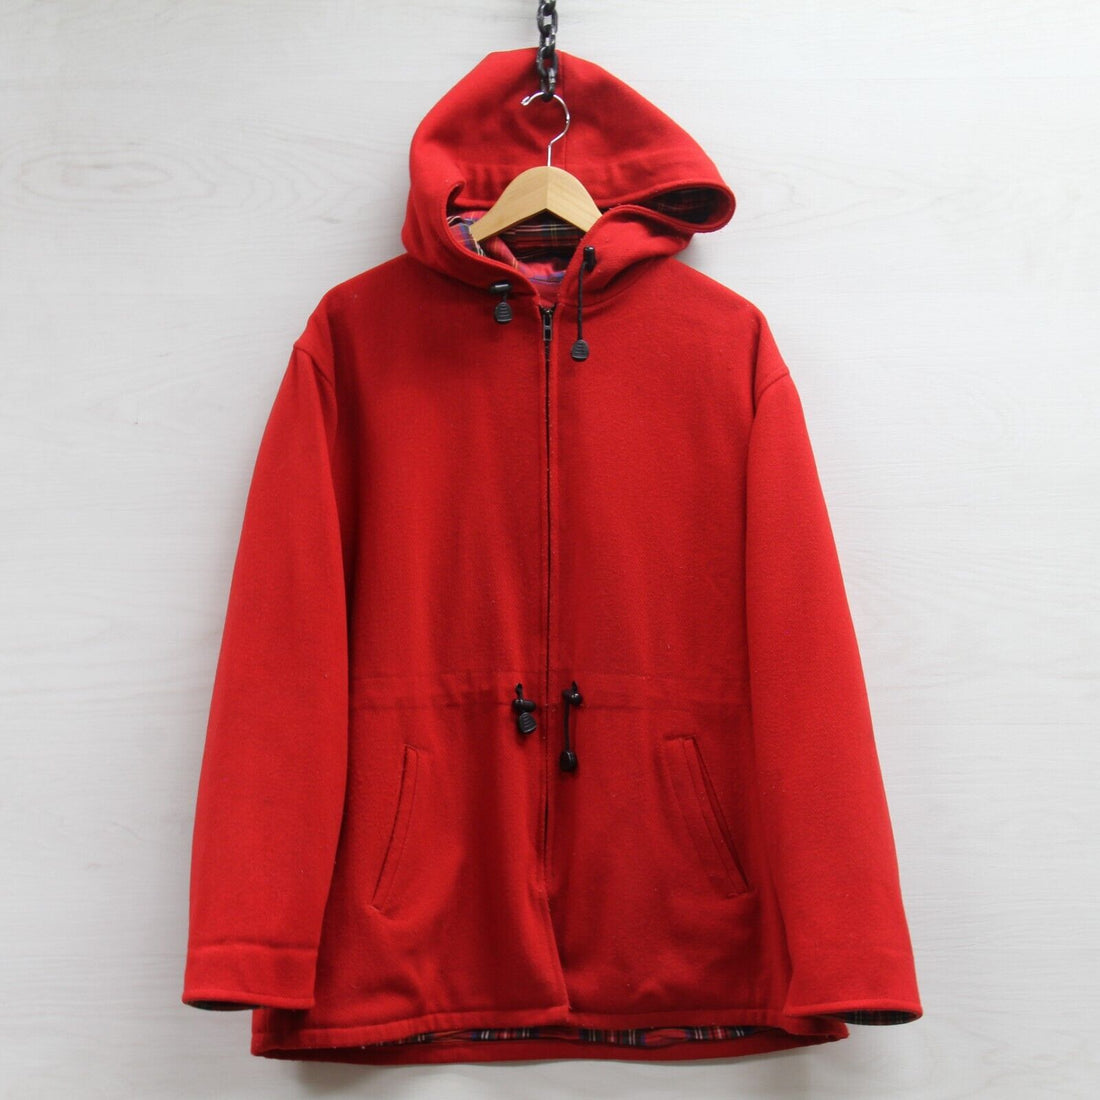 Vintage Johnson Woolen Mills Wool Coat Jacket Sz Large Red Made USA Plaid Lined